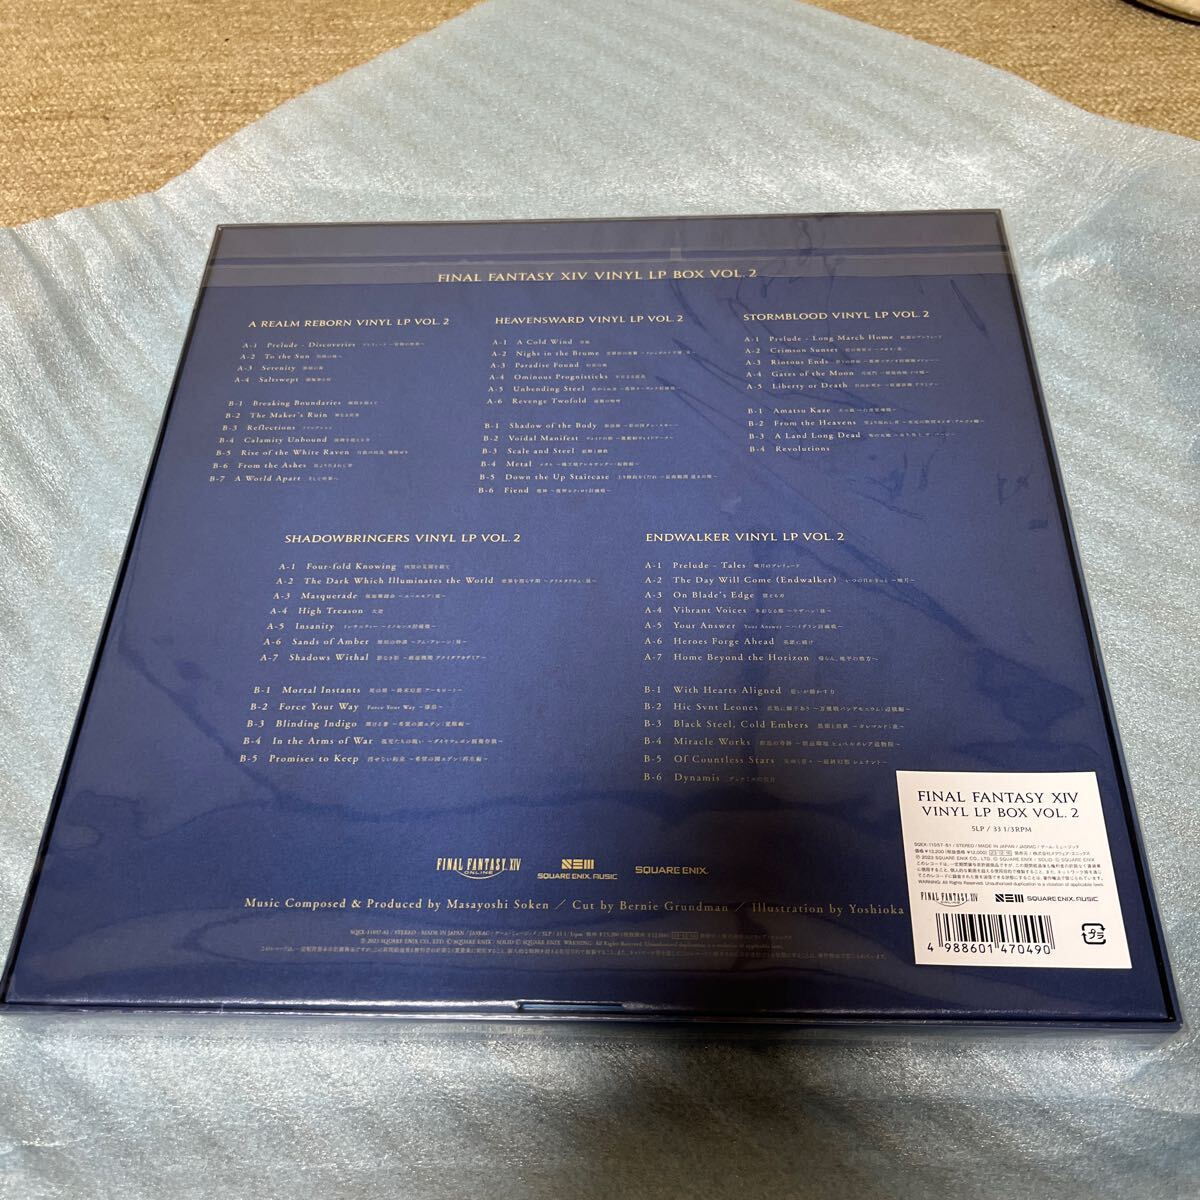 FINAL FANTASY XIV Vinyl LP Box Vol. 2 アナログレコード 未開封品の画像2